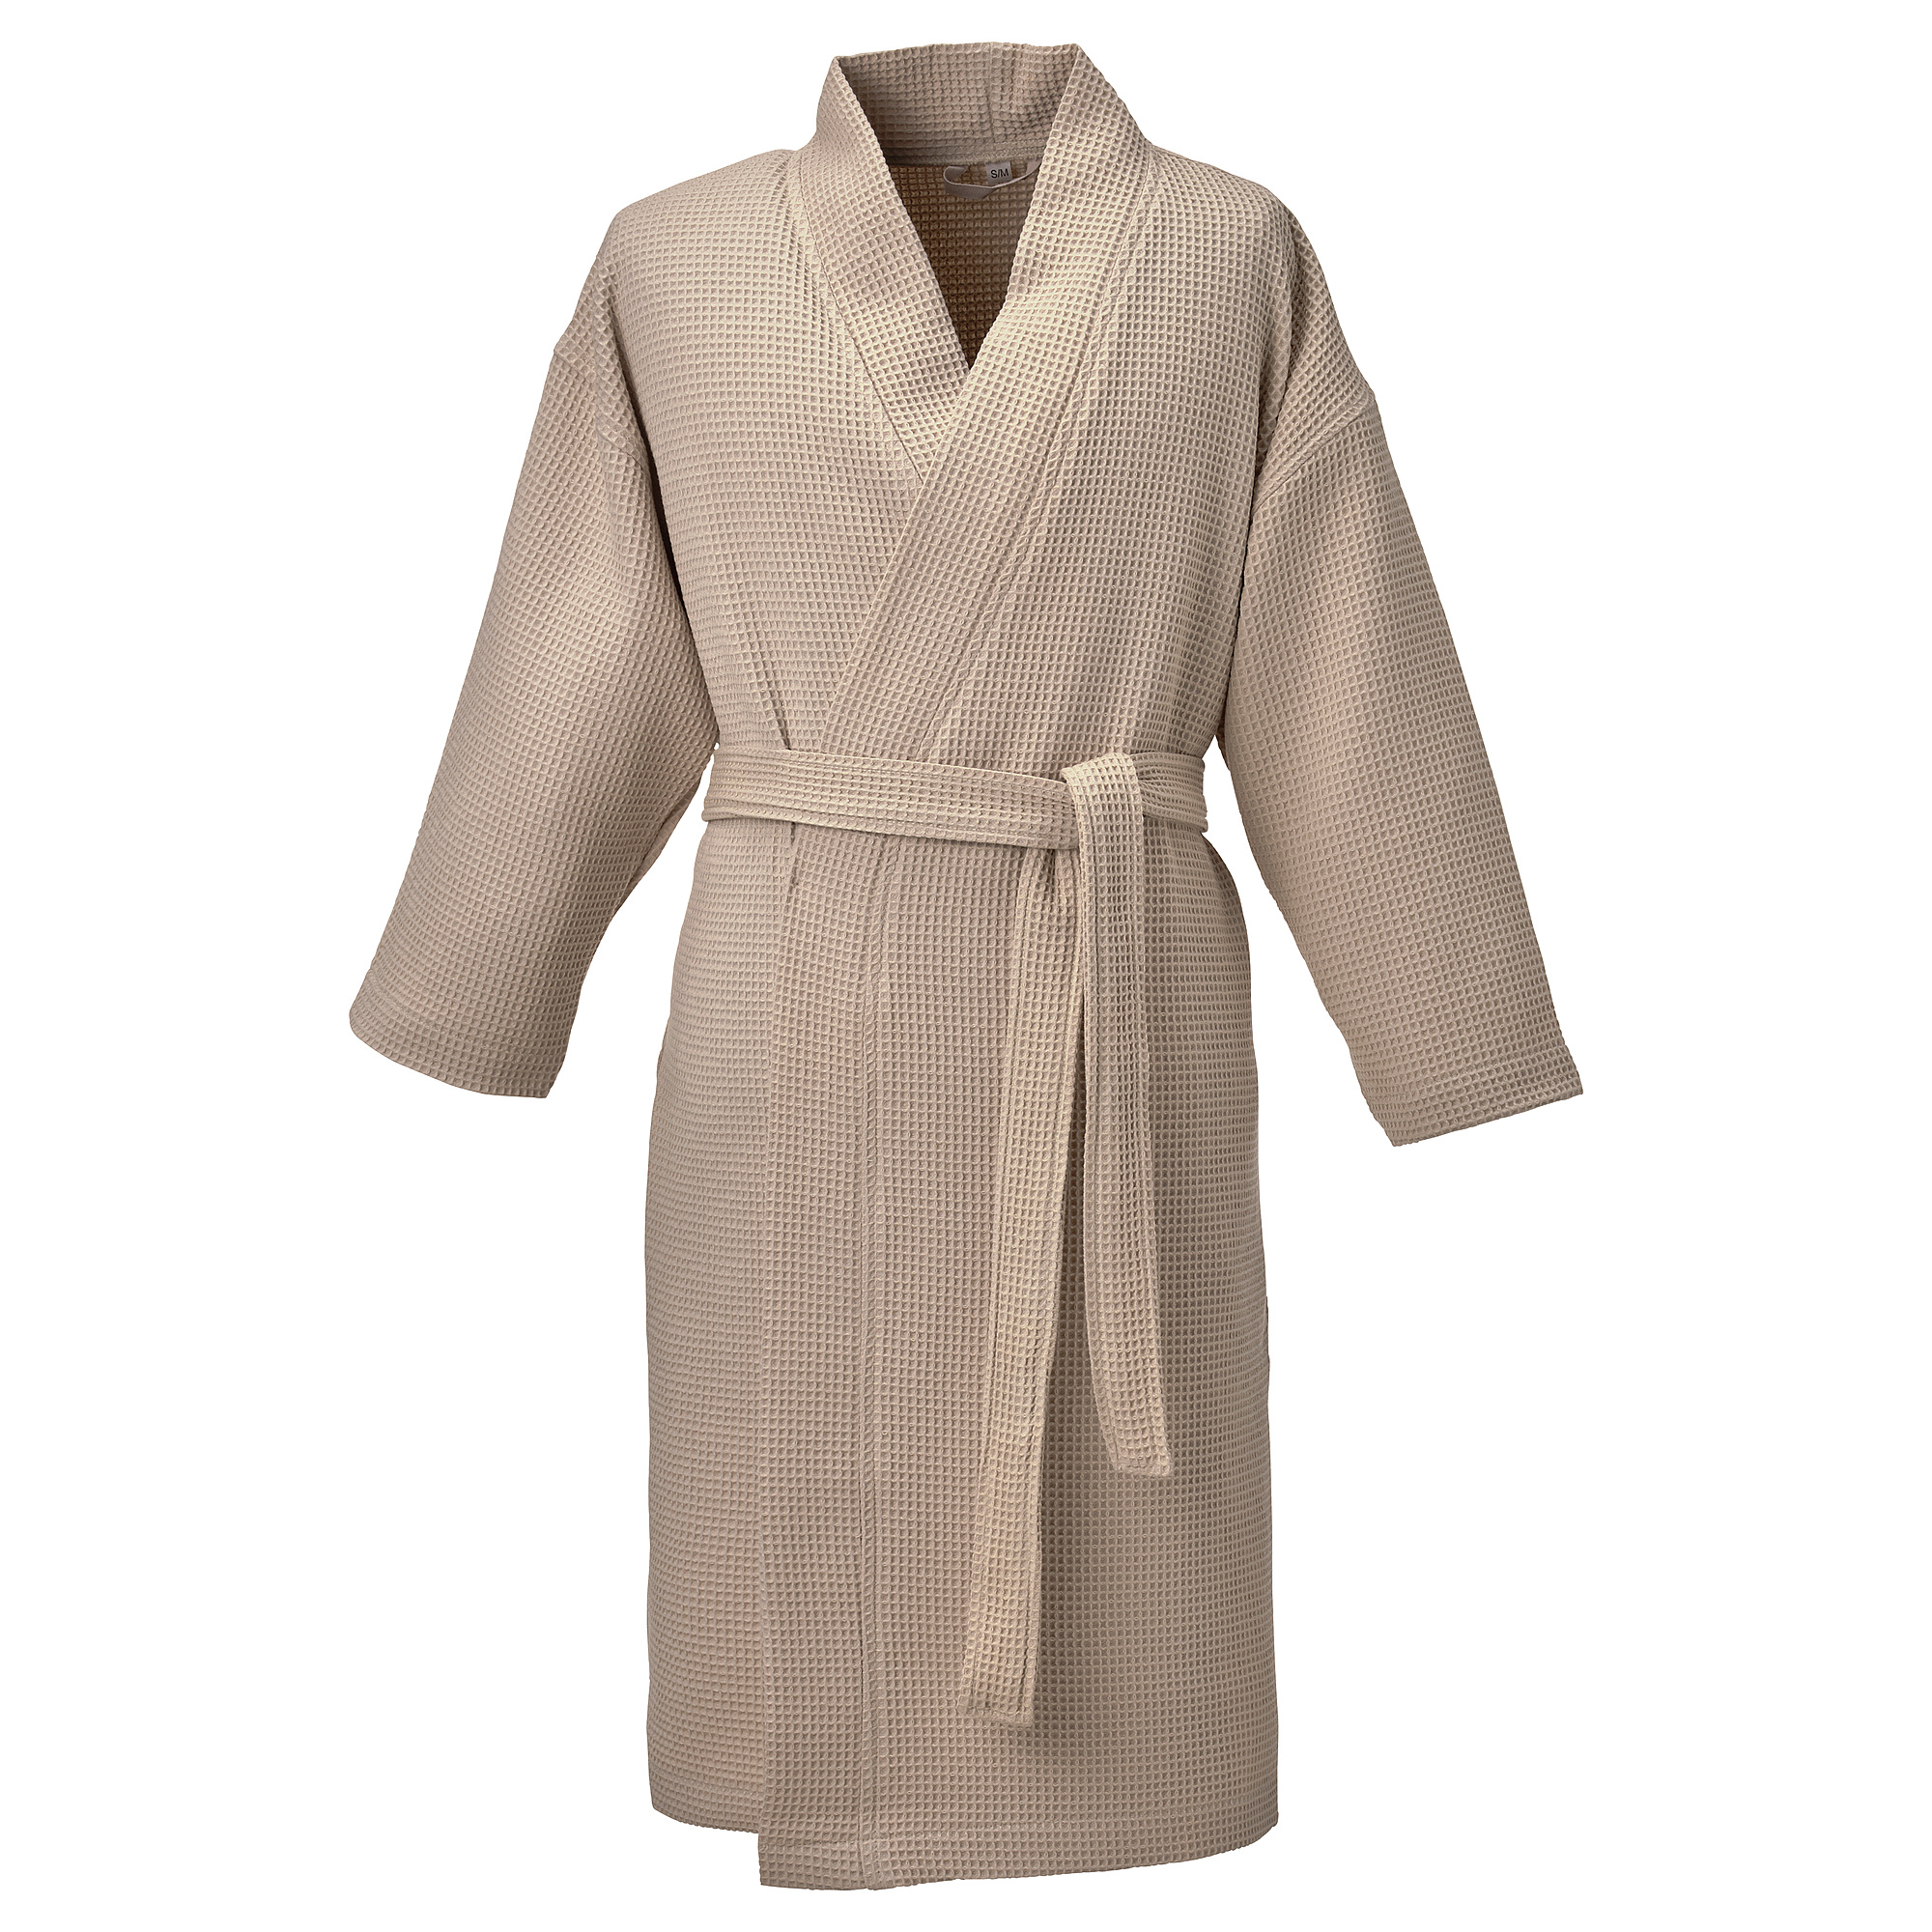 AKEA bath robe Sz S/M - Intimates & Sleepwear